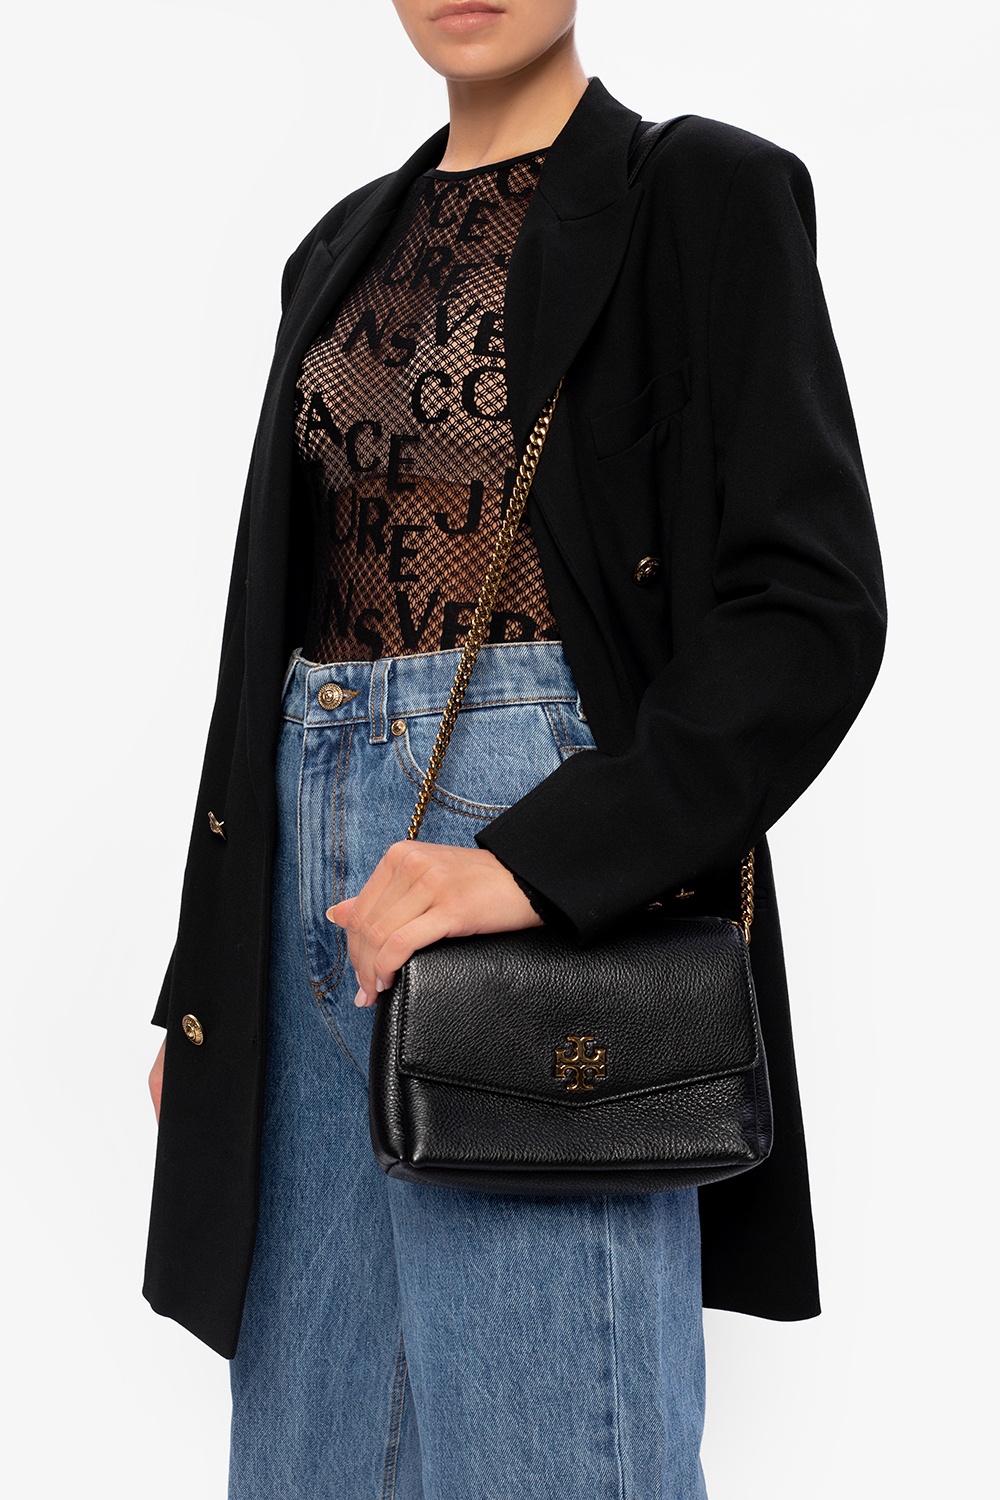 Tory Burch 'Kira Convertible' shoulder bag, Women's Bags